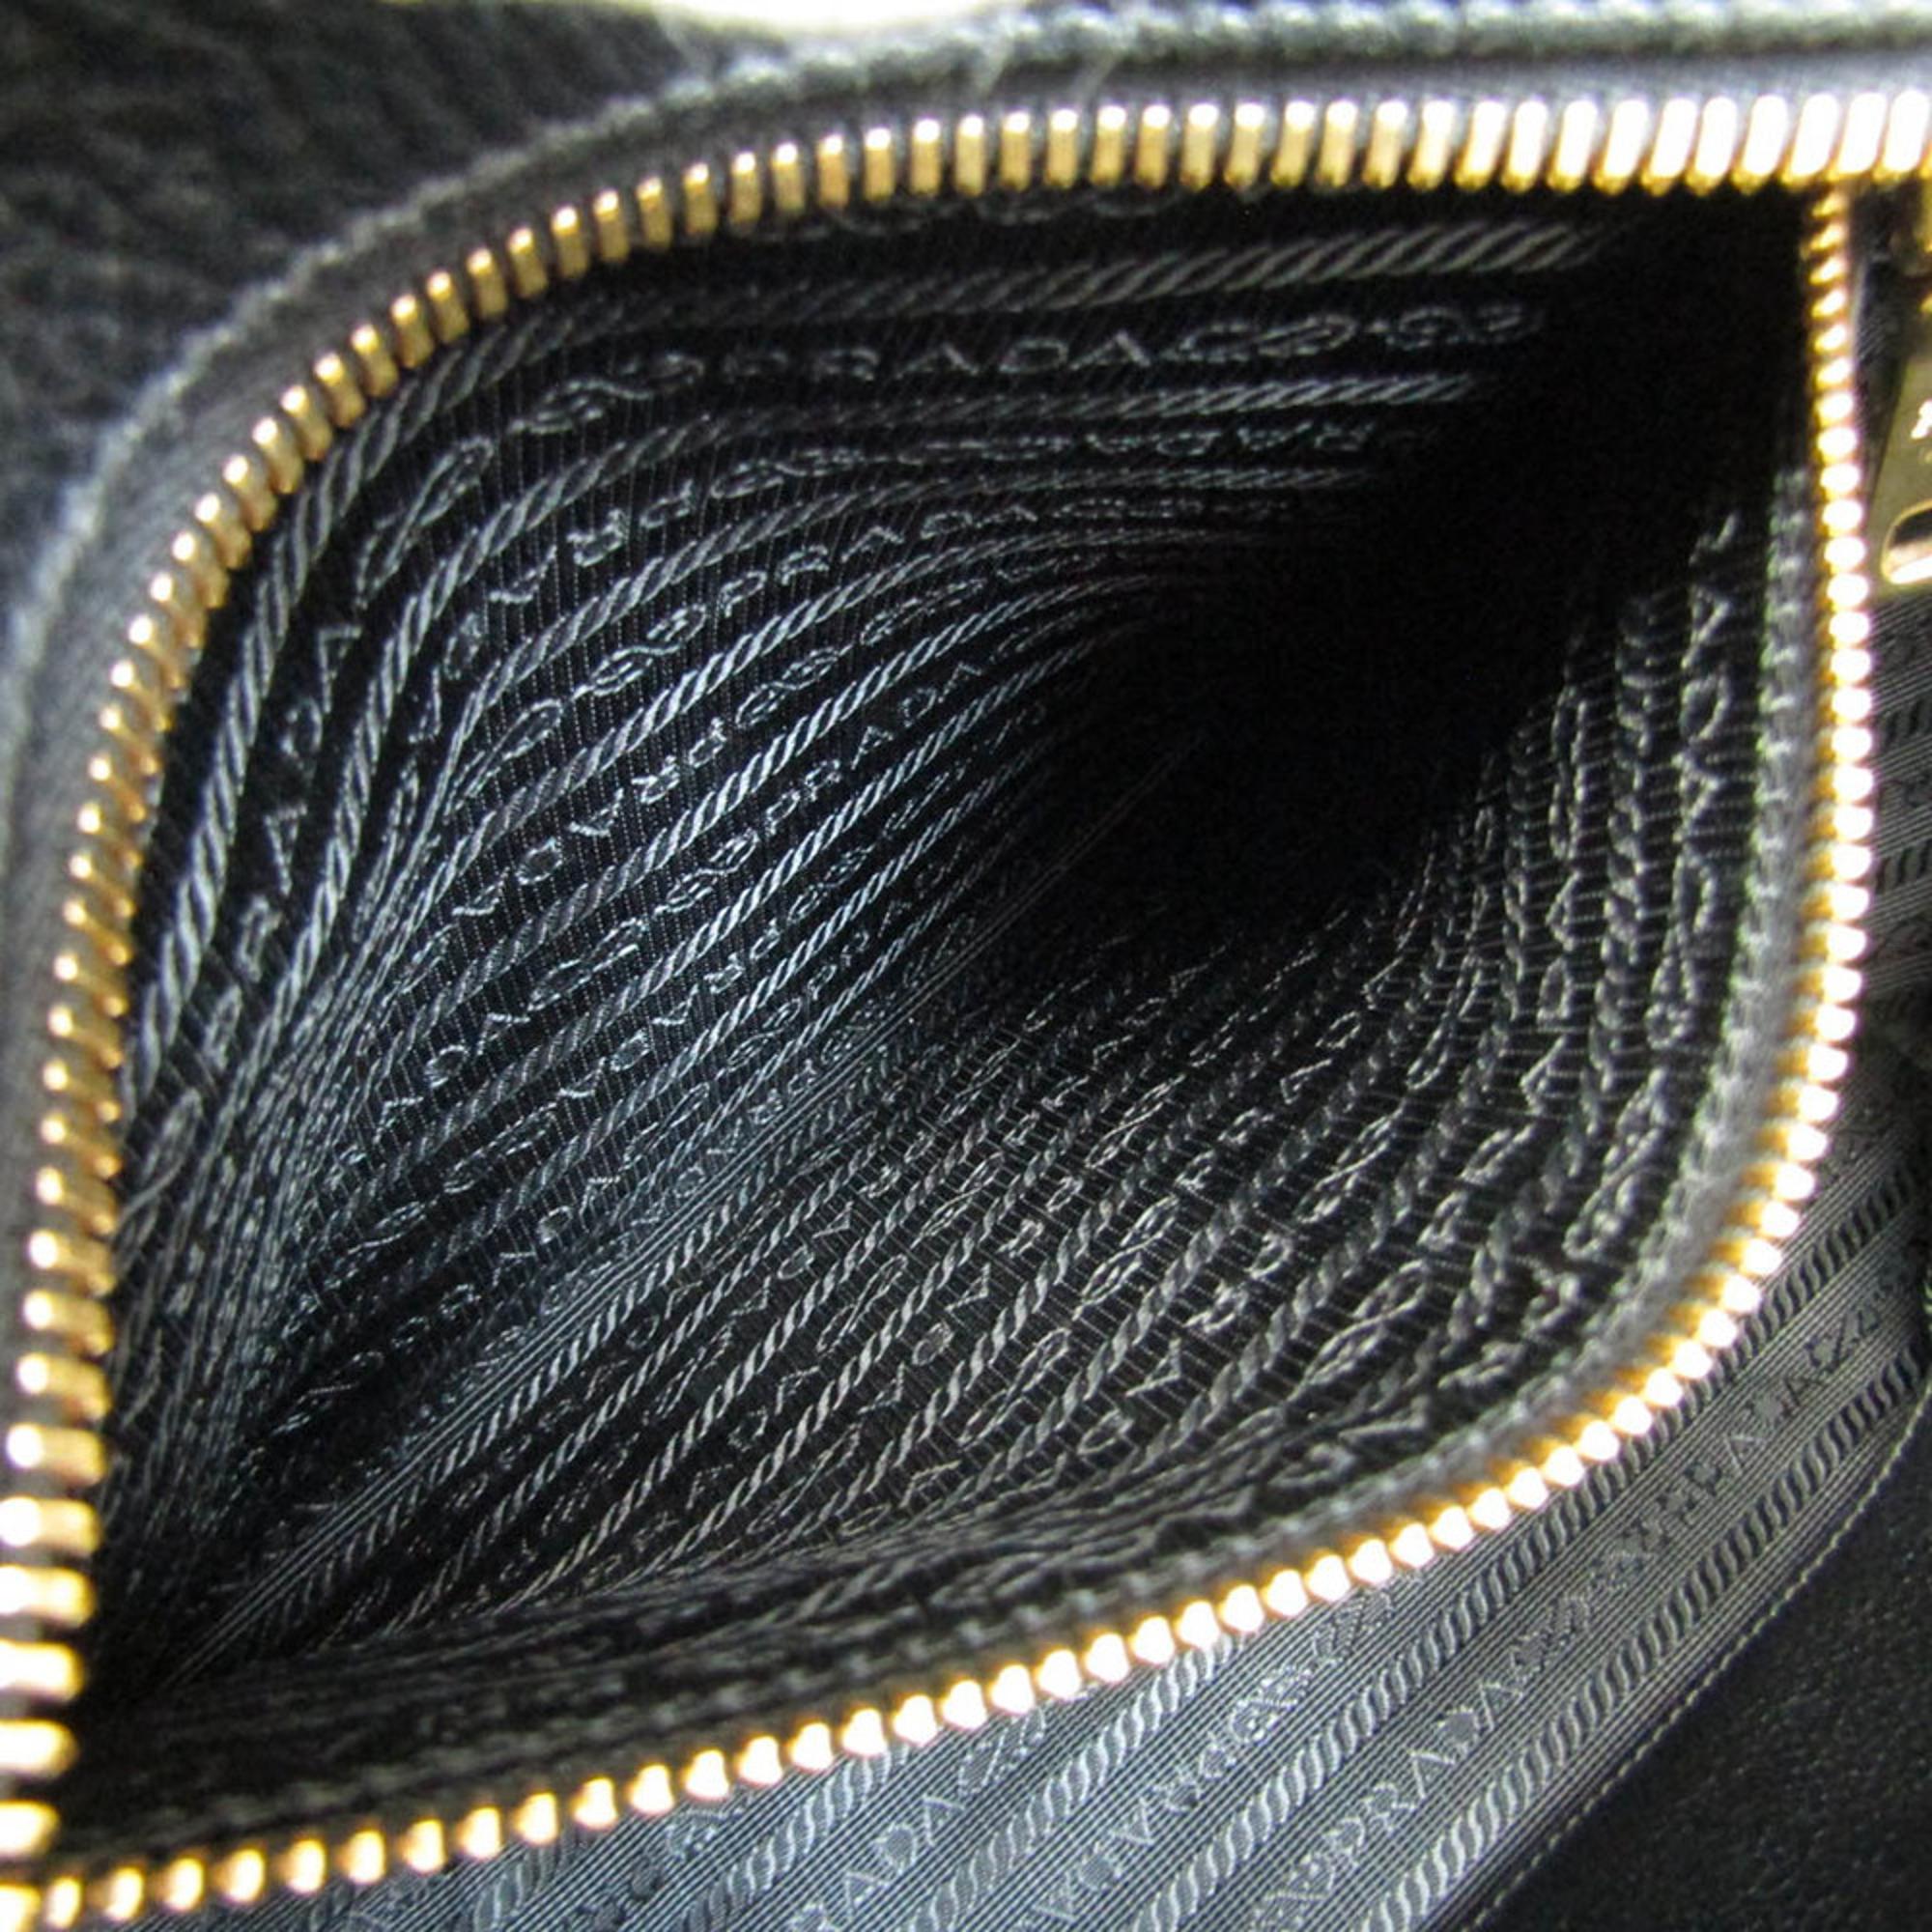 Prada Black Leather Vitello Phenix Tote Bag